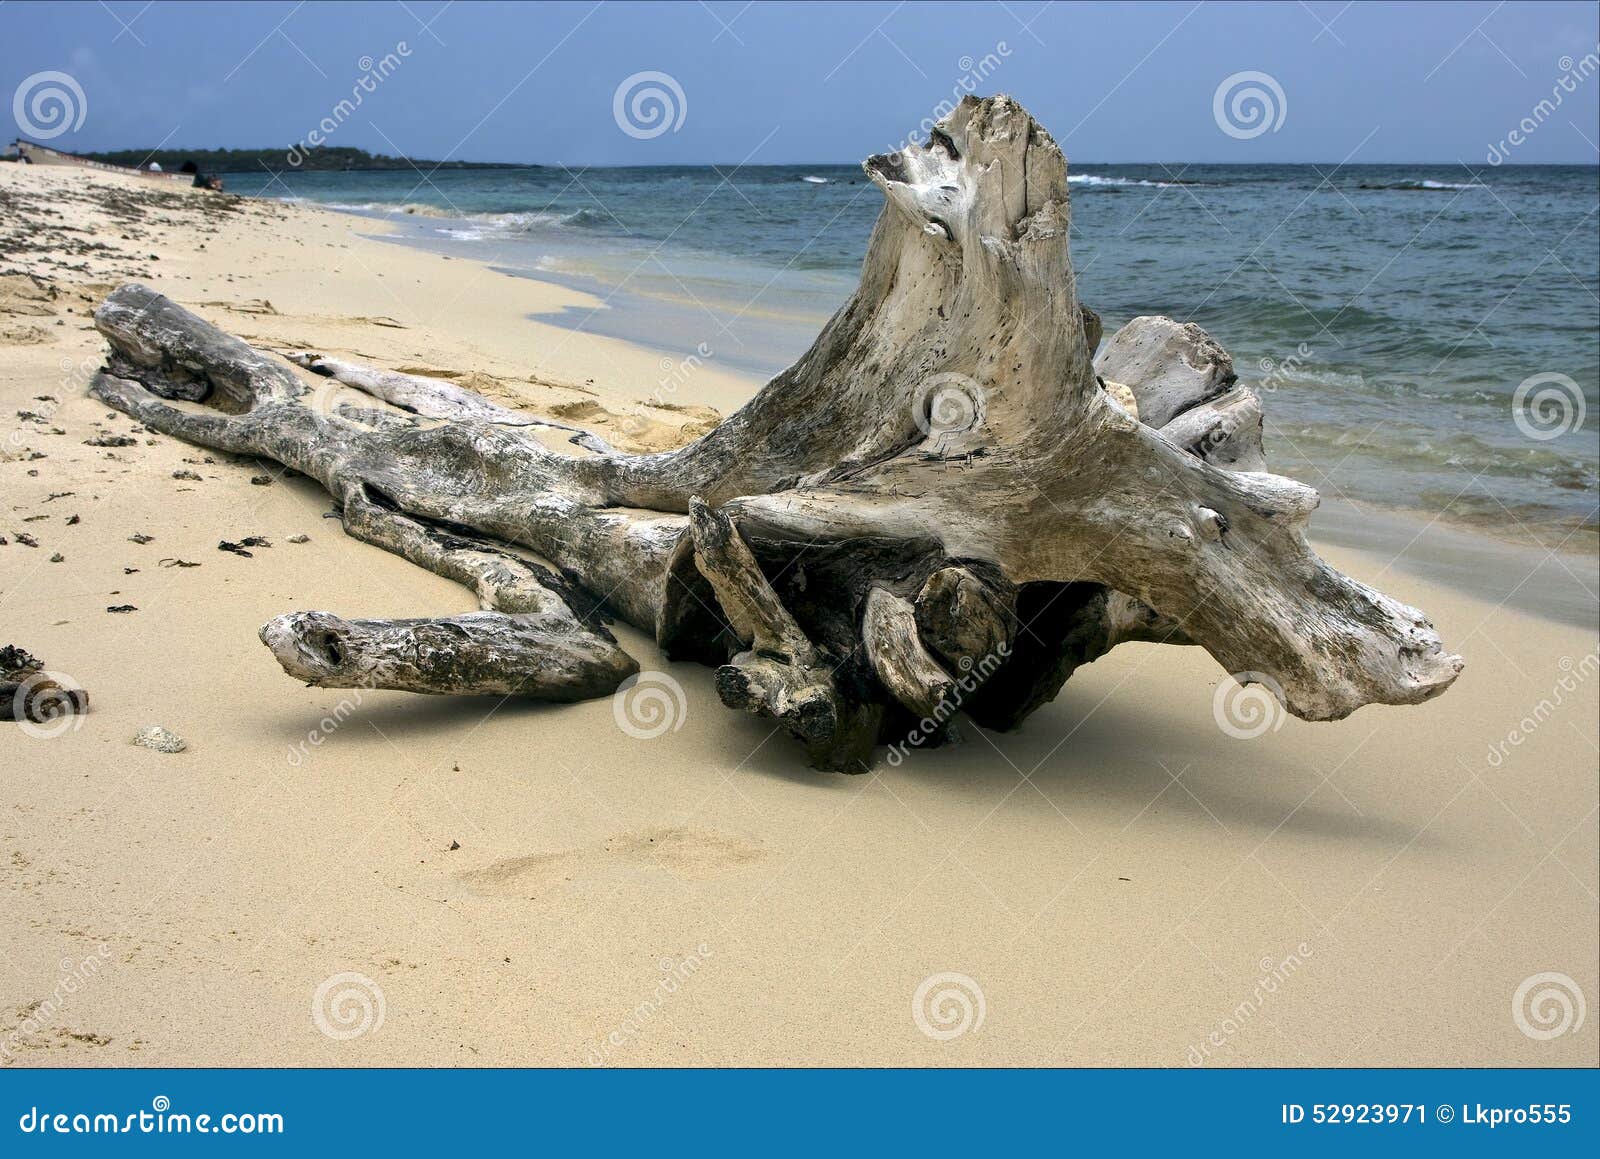 beach and tree in republica dominicana